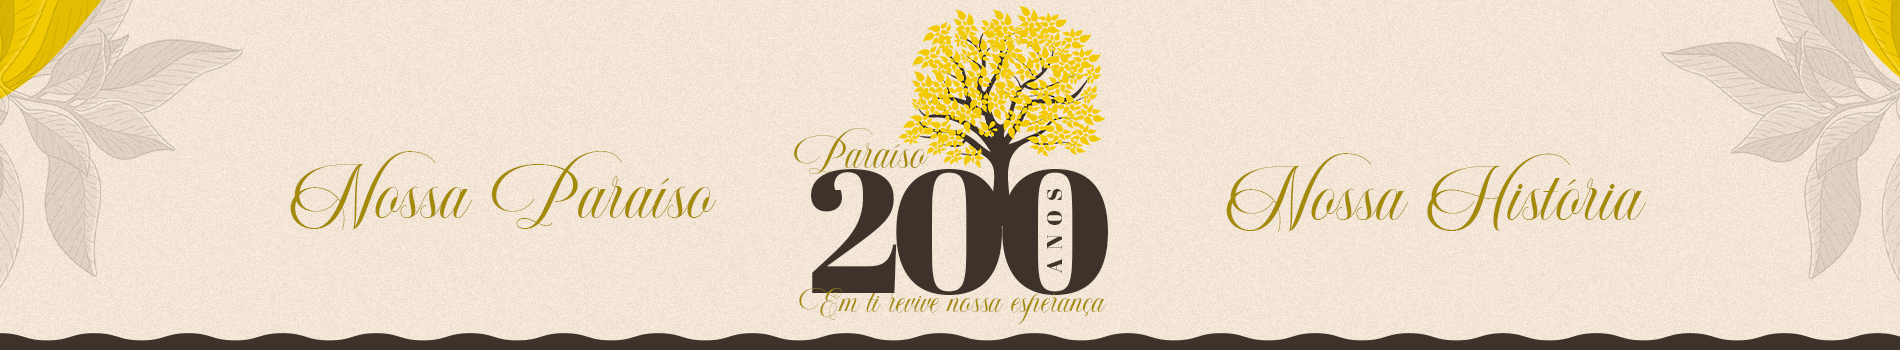 200 Anos 